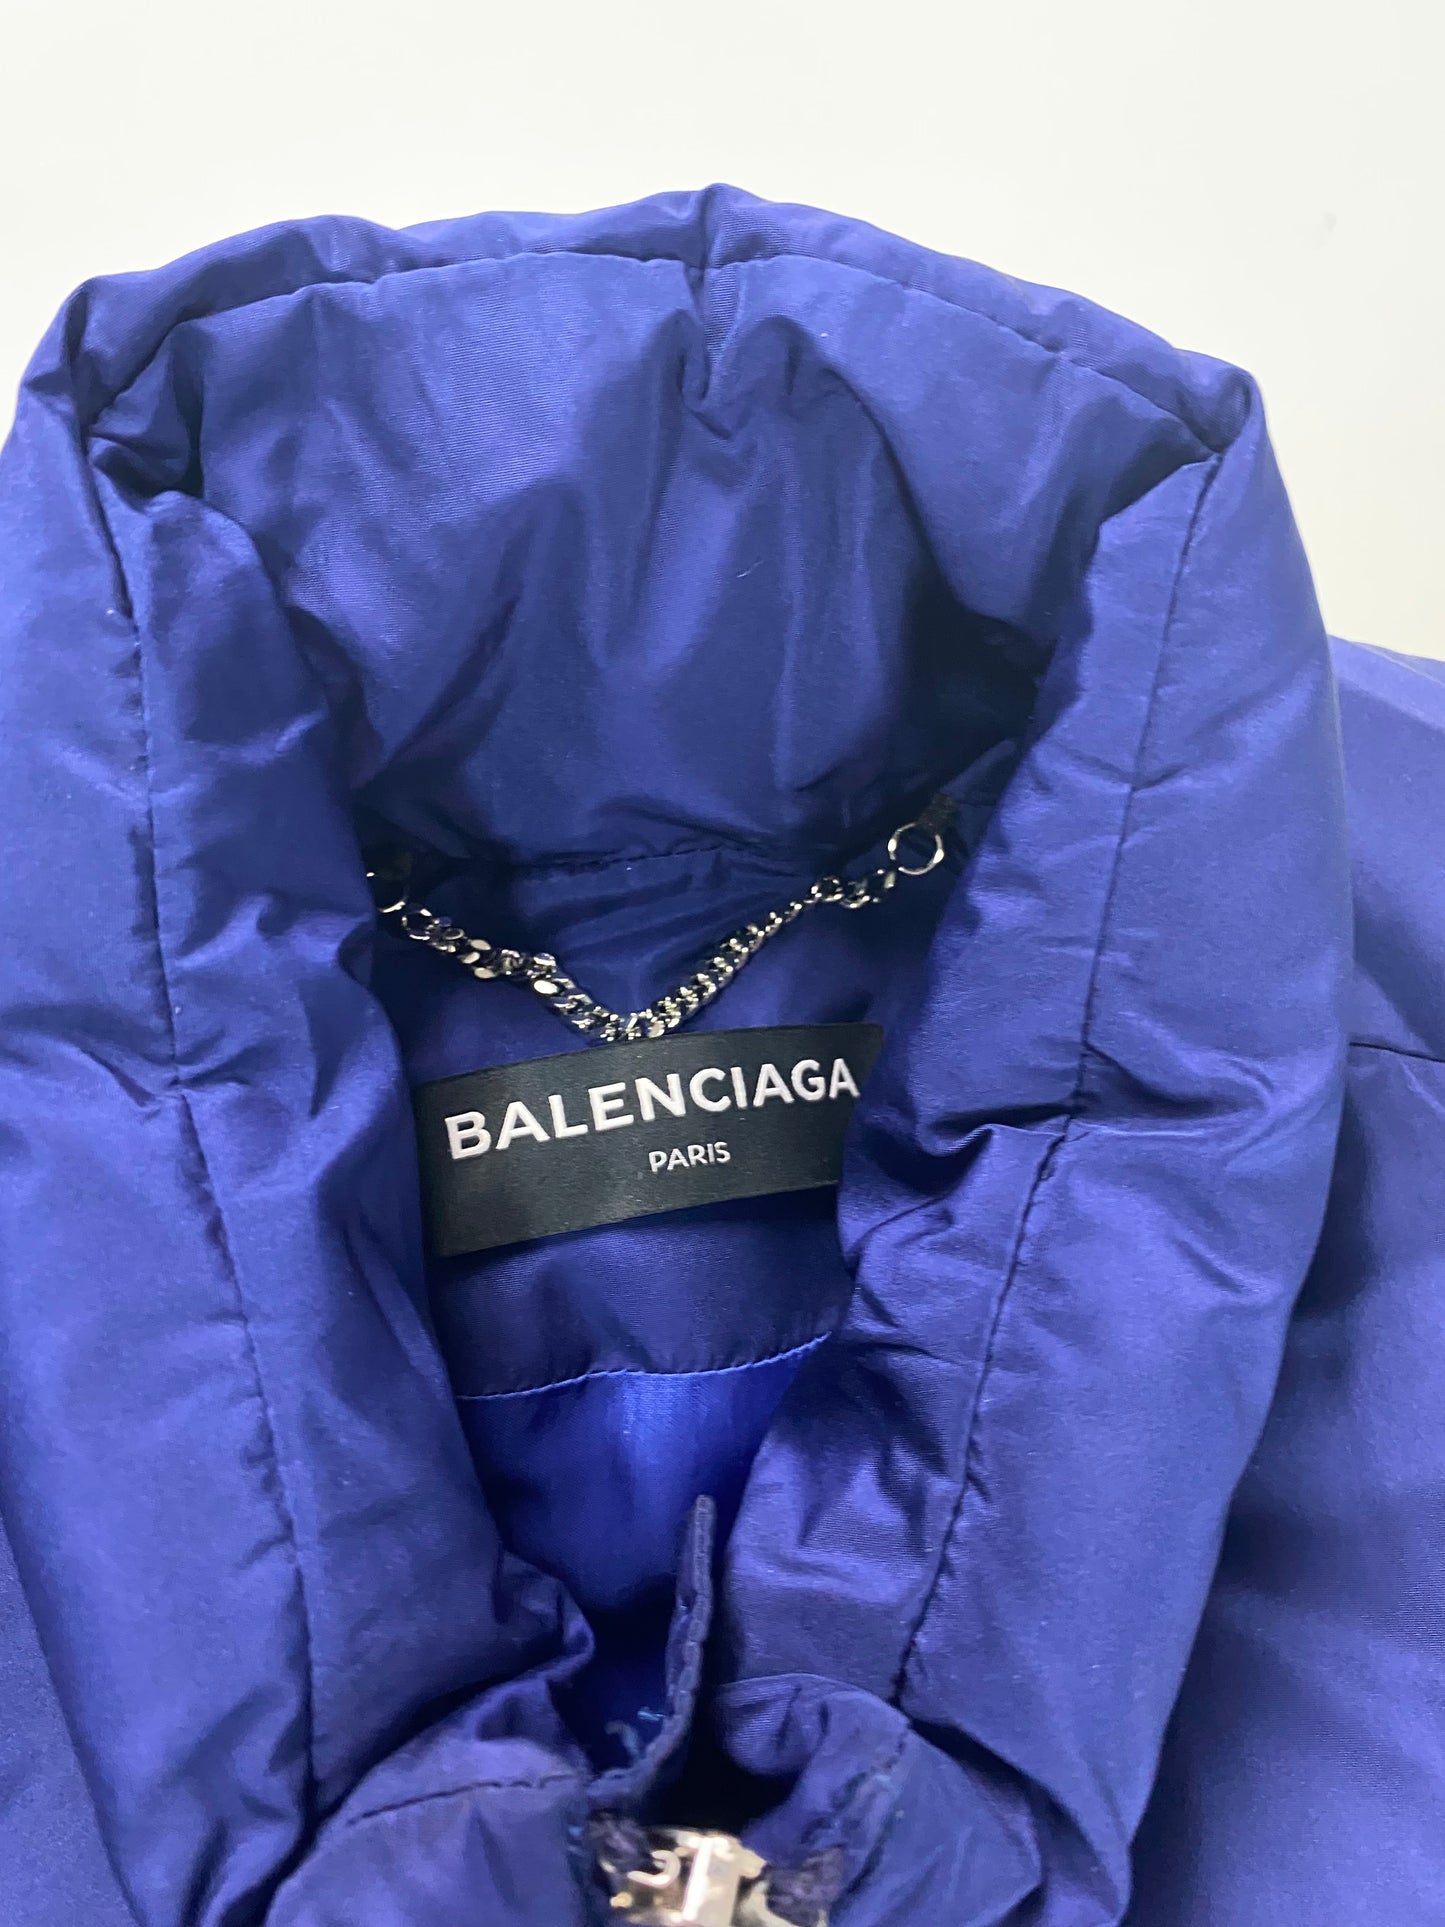 Balenciaga AW17 runway C-Shape puffer vest in royal blue SZ:50